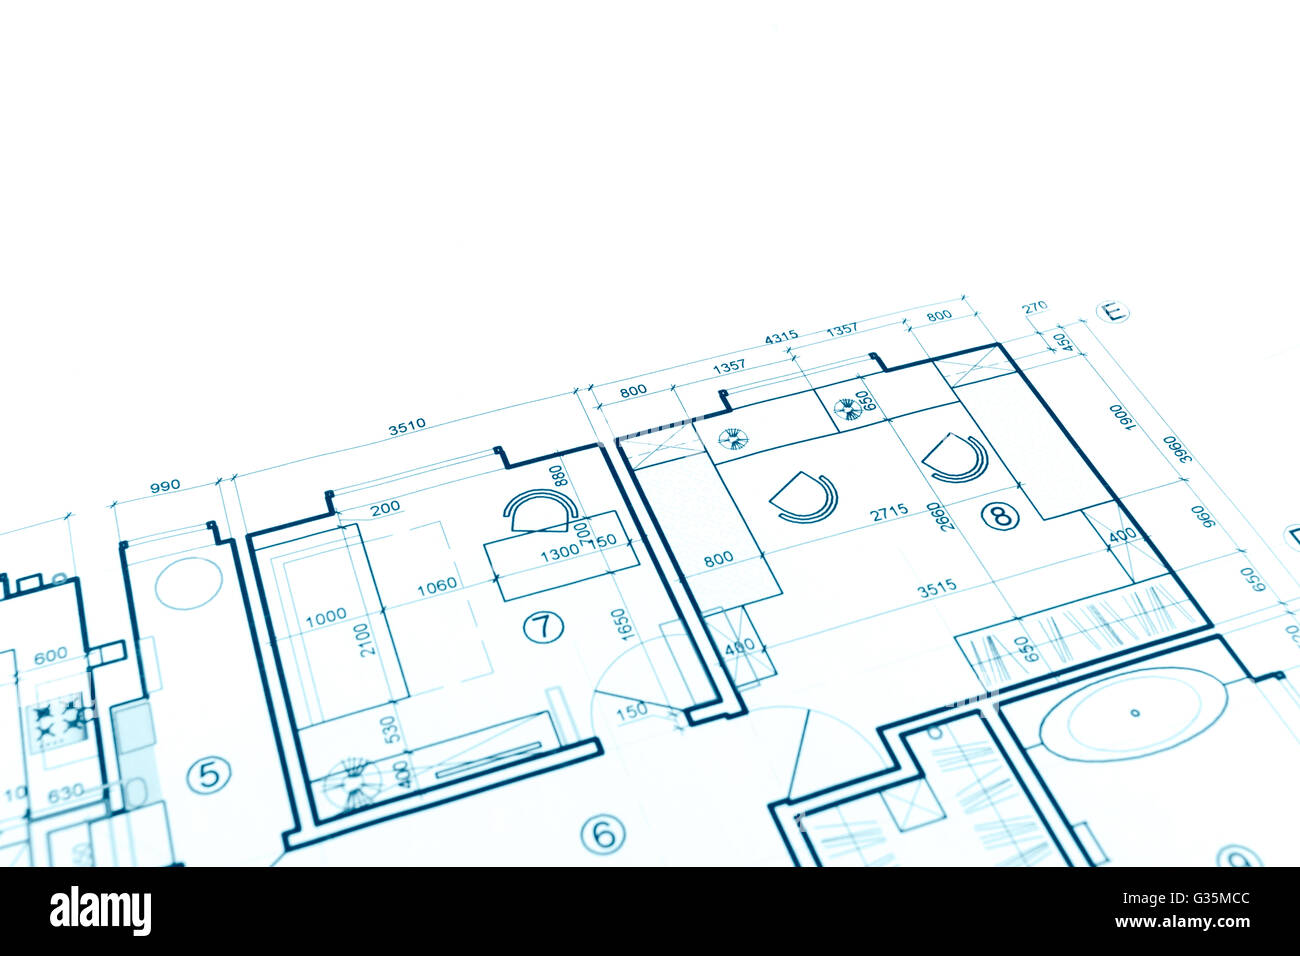 floor plan blueprint, blueprints background, architecture drawing Stock Photo